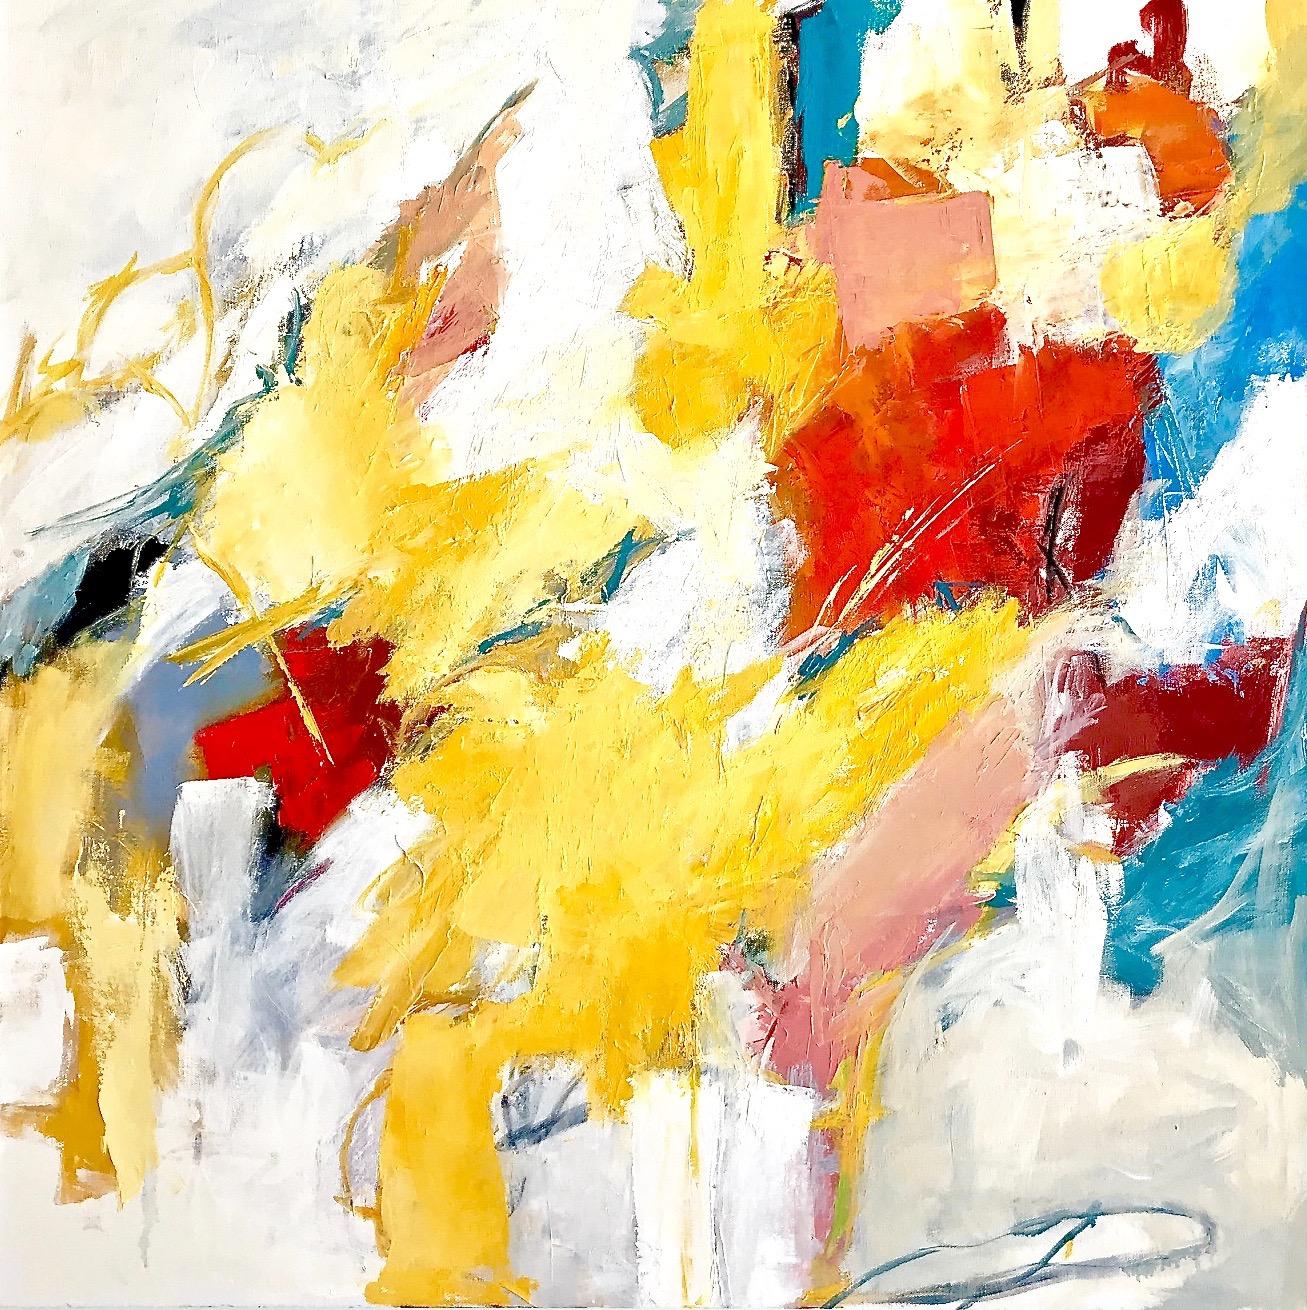 Abstract Painting Cathy Bennigson - « Sunday Splash », expressionniste abstrait rouge/jaune/bleu/blanc/gris/noir/turquoise